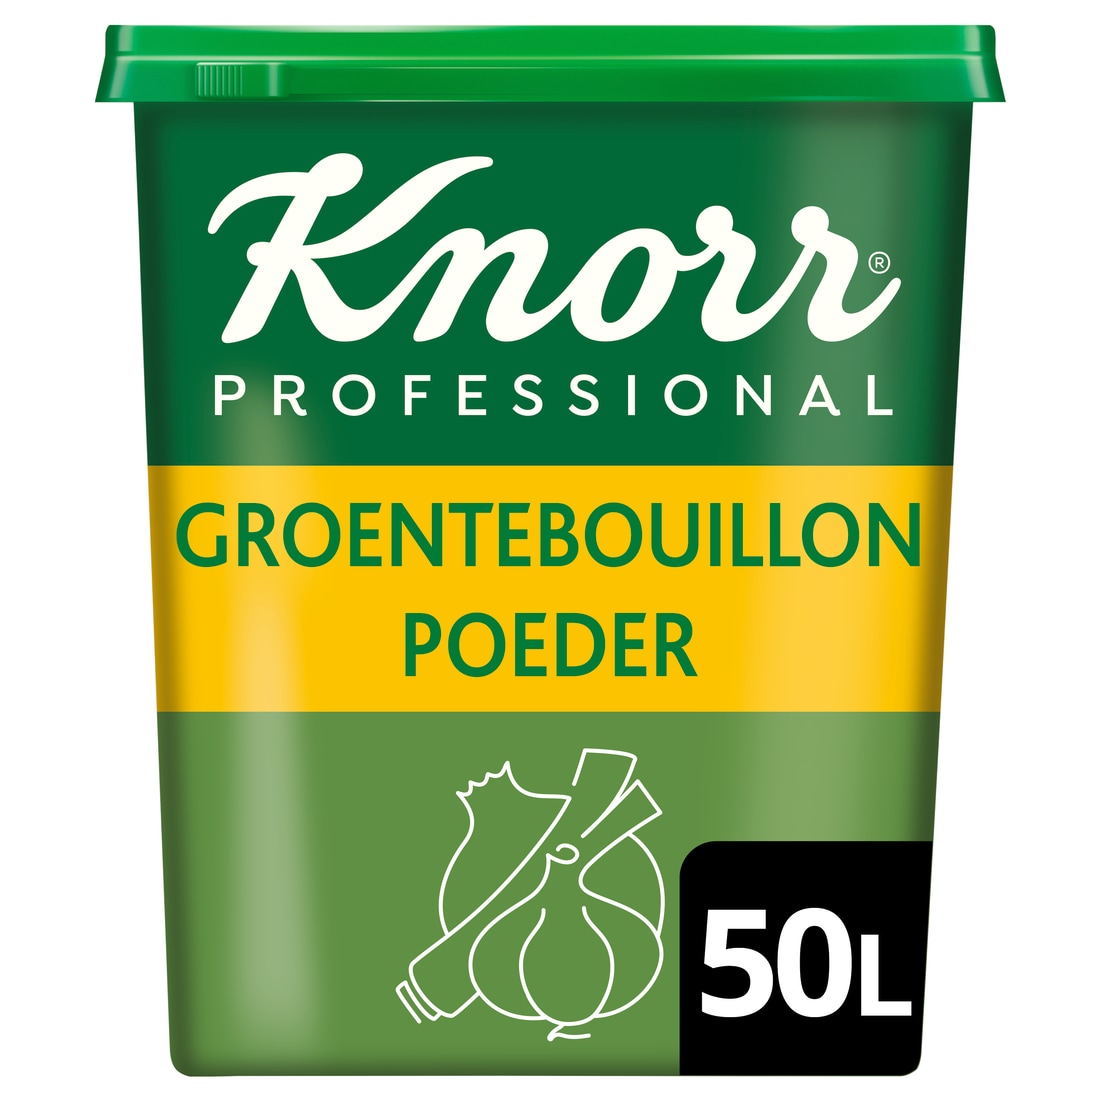 Knorr Professional Groentebouillon poeder krachtig  50L